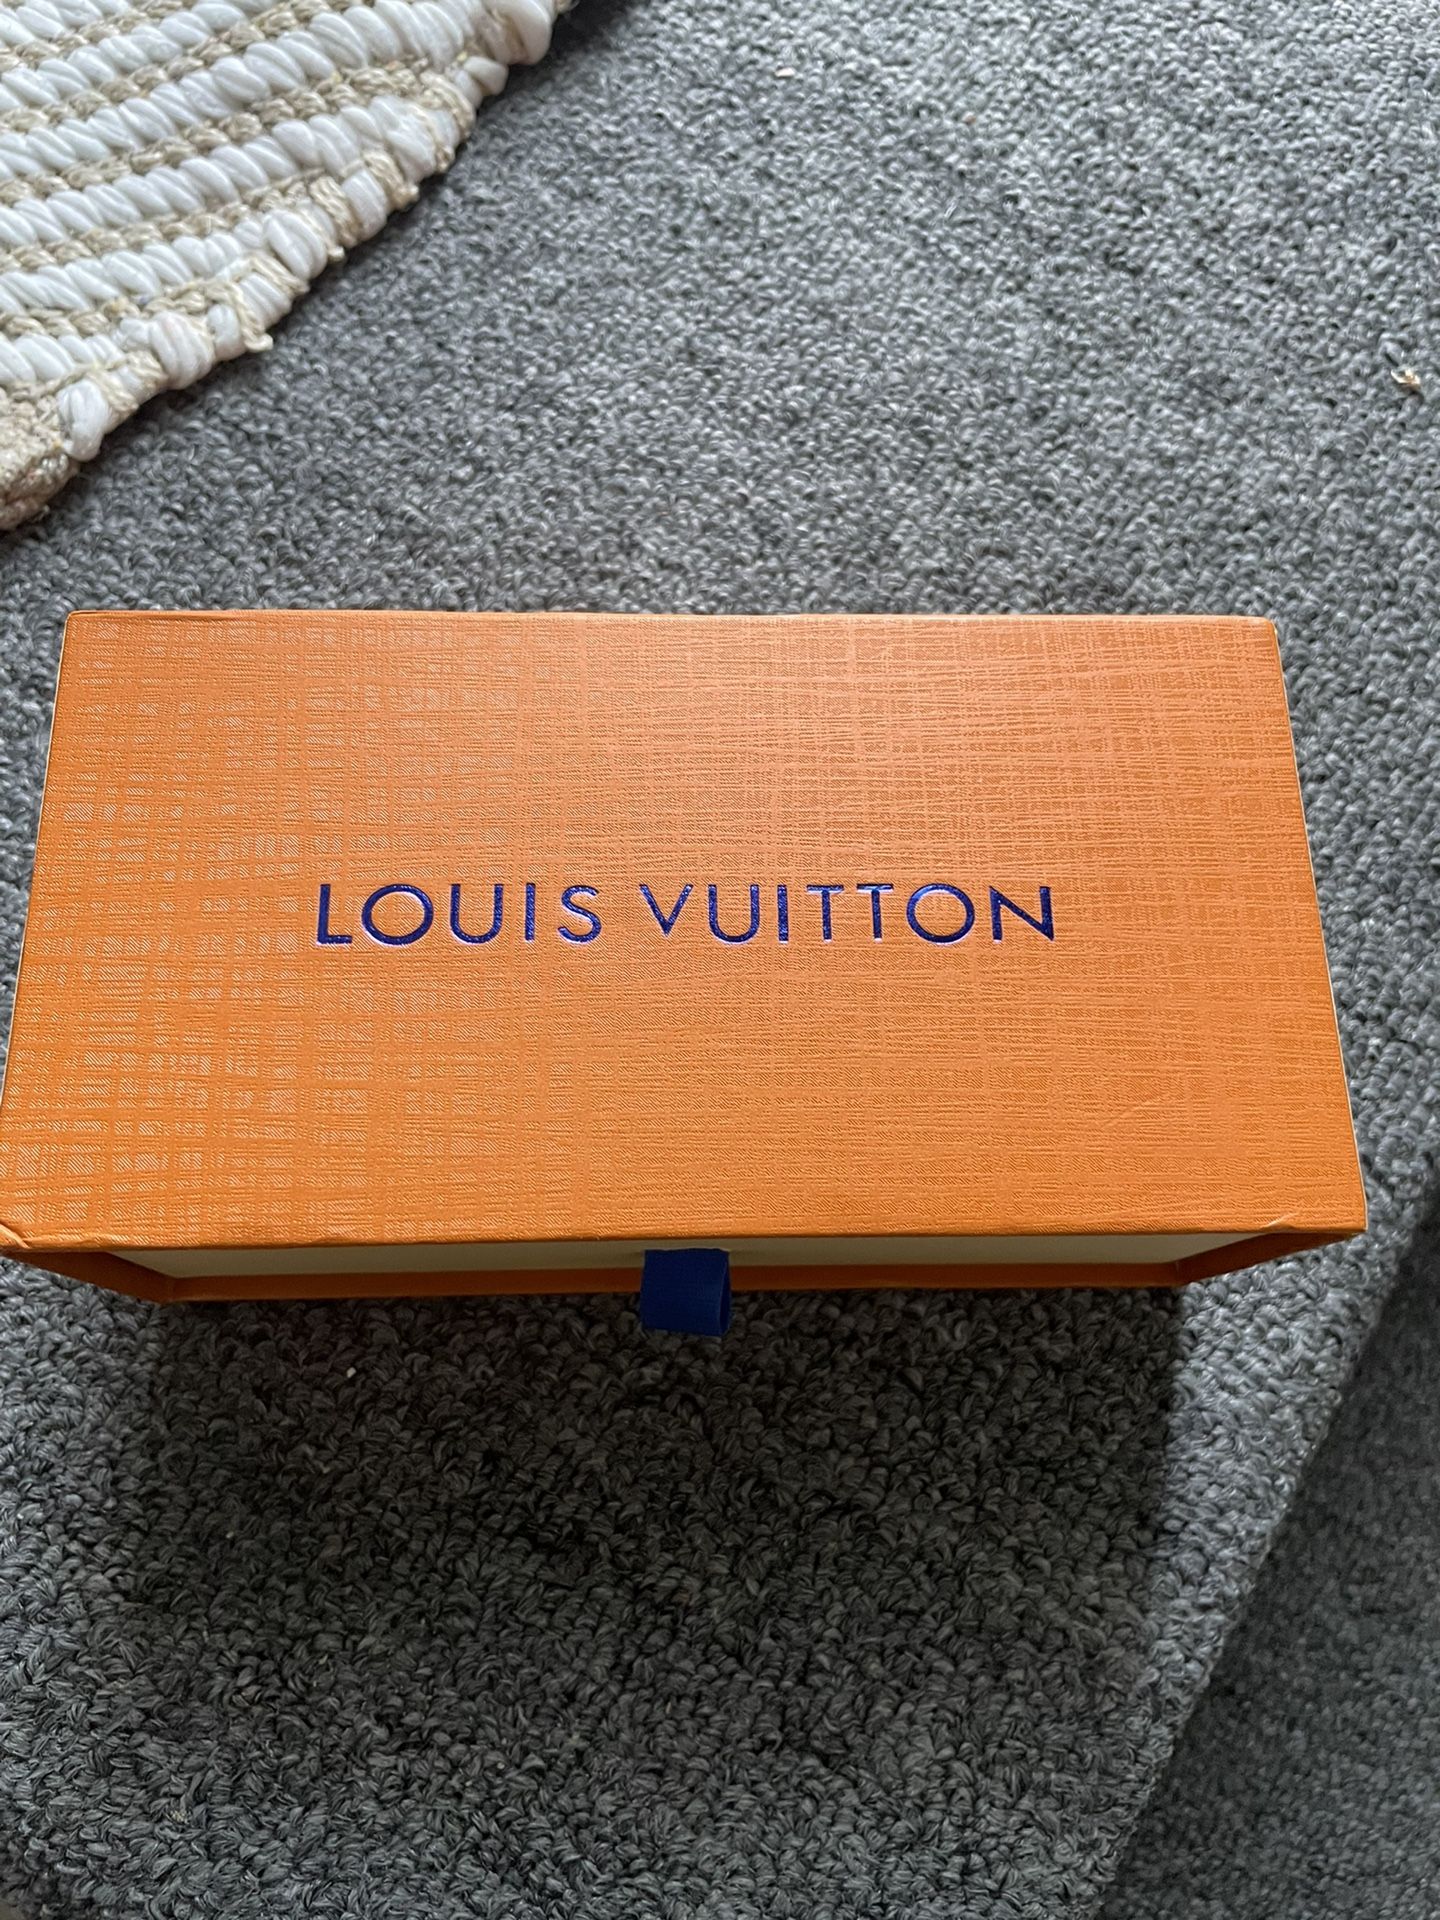 Louis Vuitton Millionaire Z1165w for Sale in Hayward, CA - OfferUp